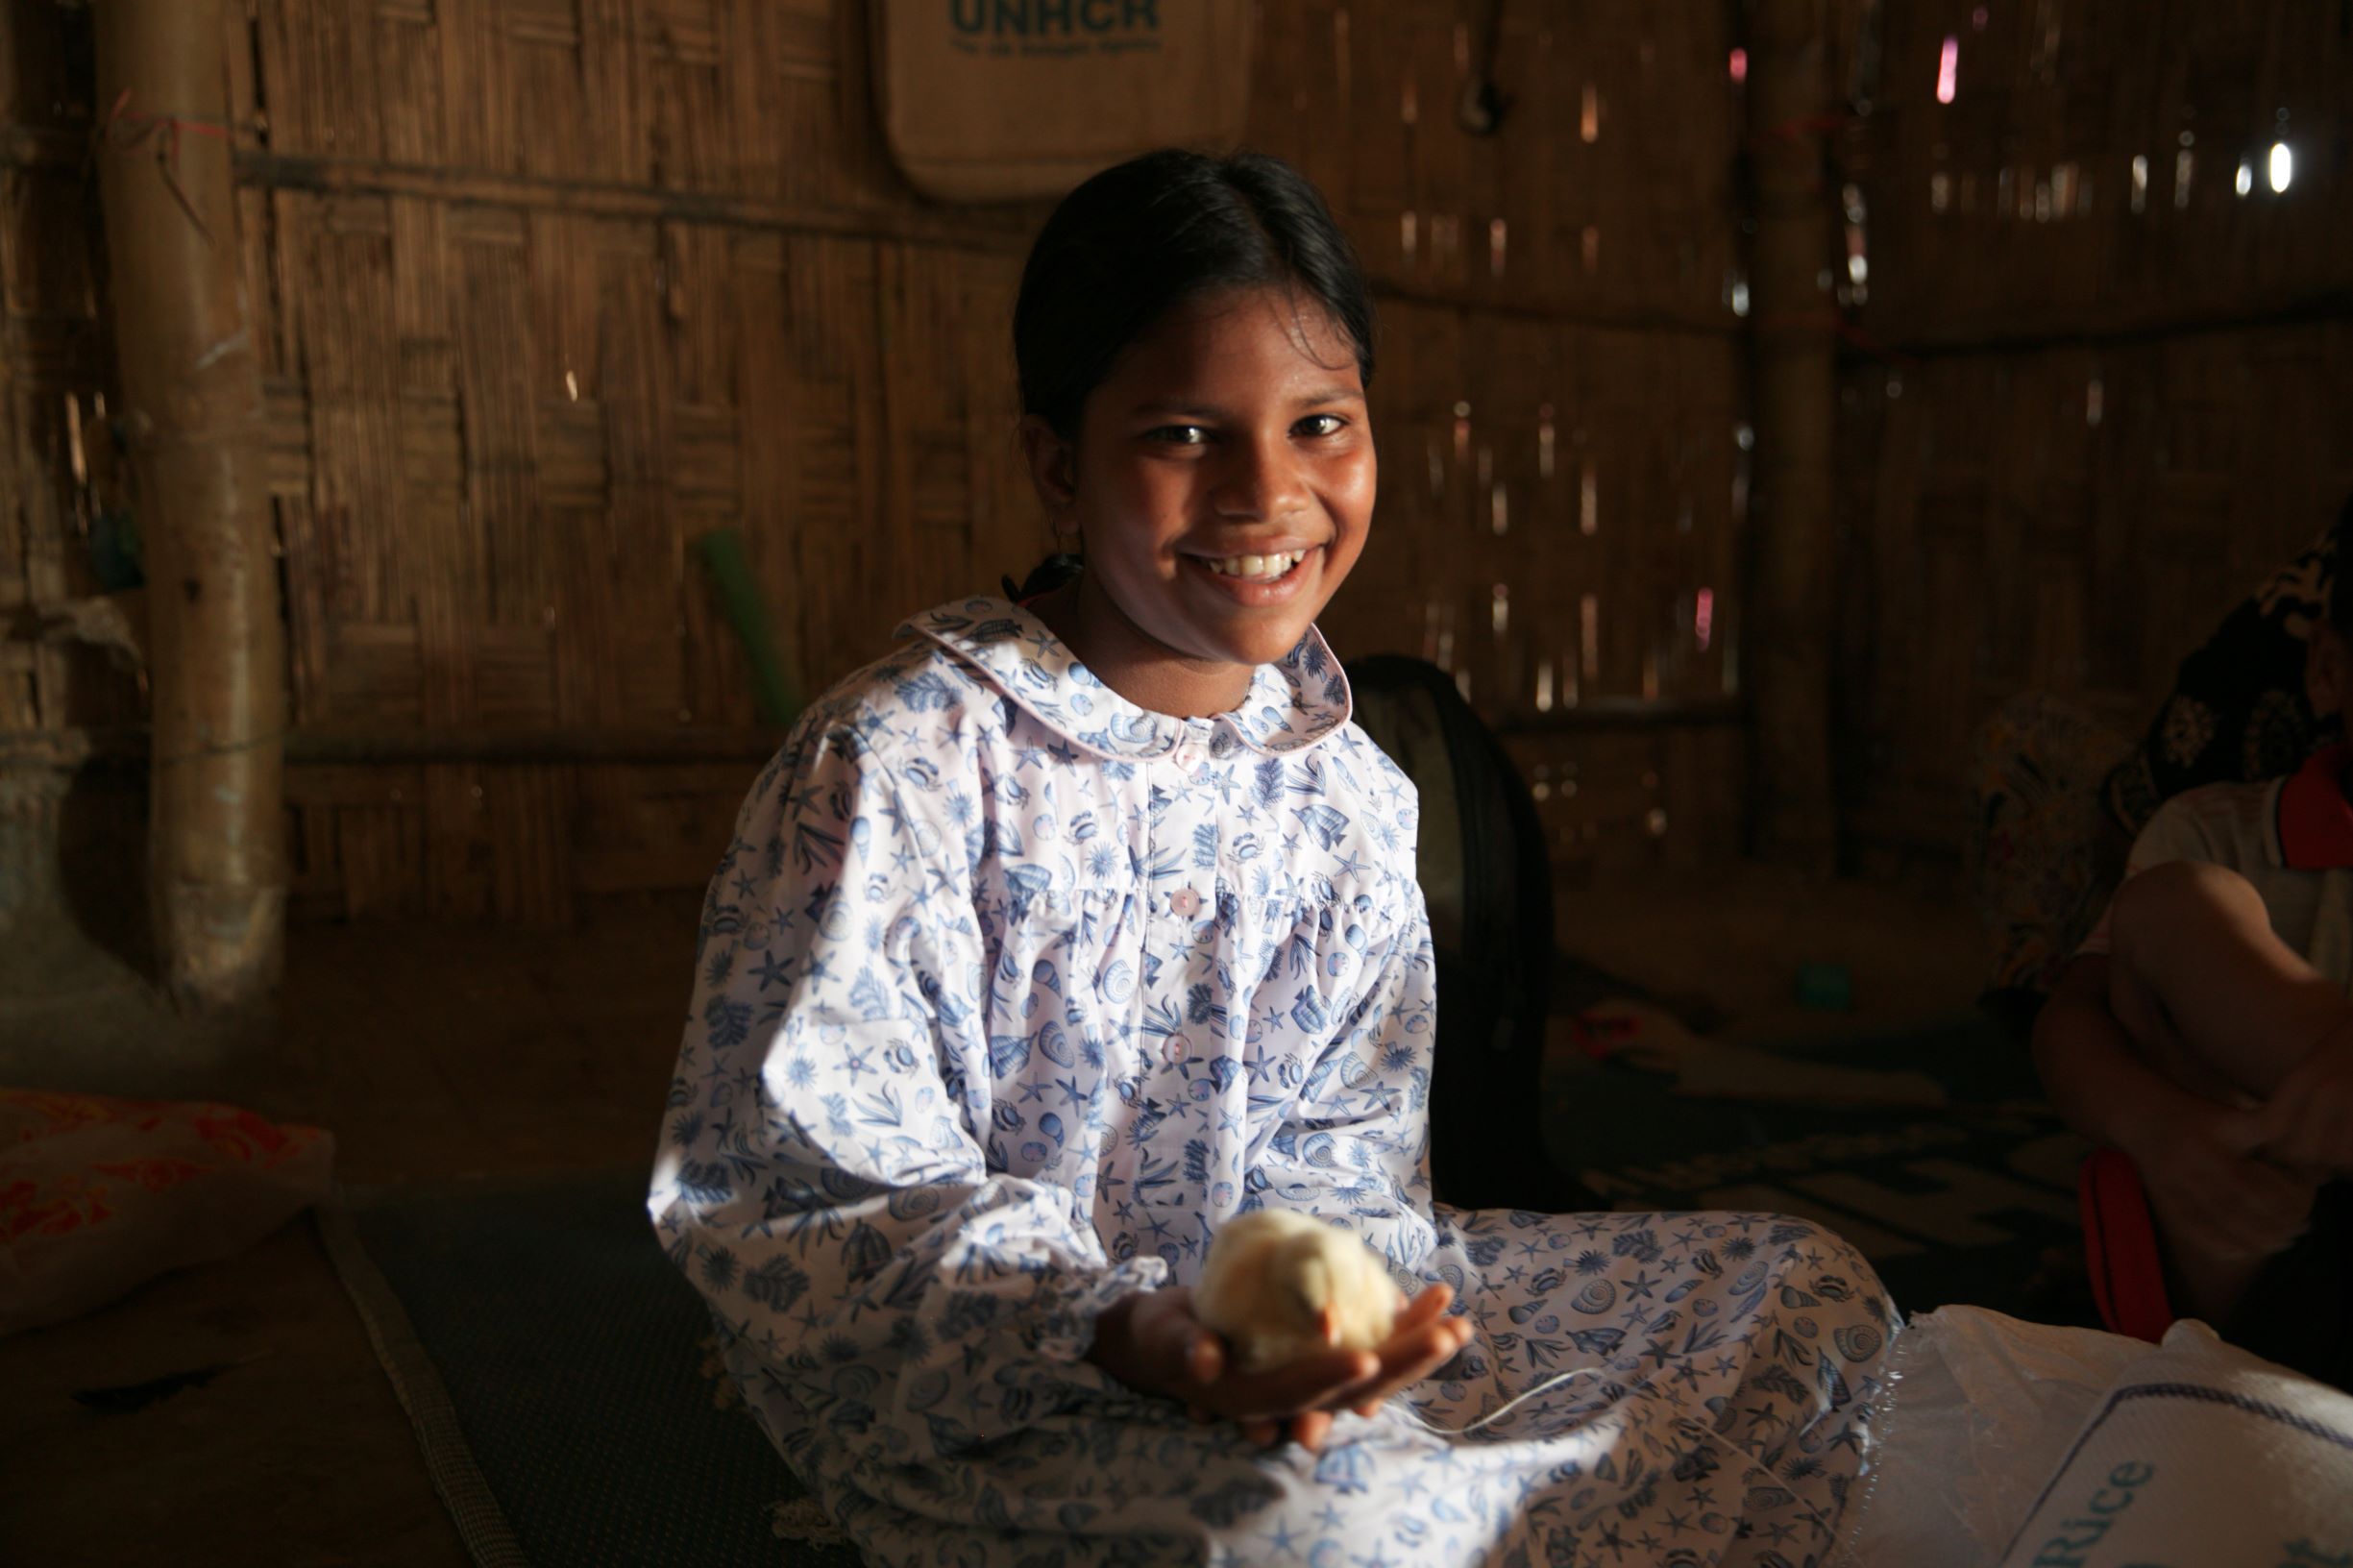 Pyjama House nightie brings a smile to a Rohingya refuge in Bangladesh